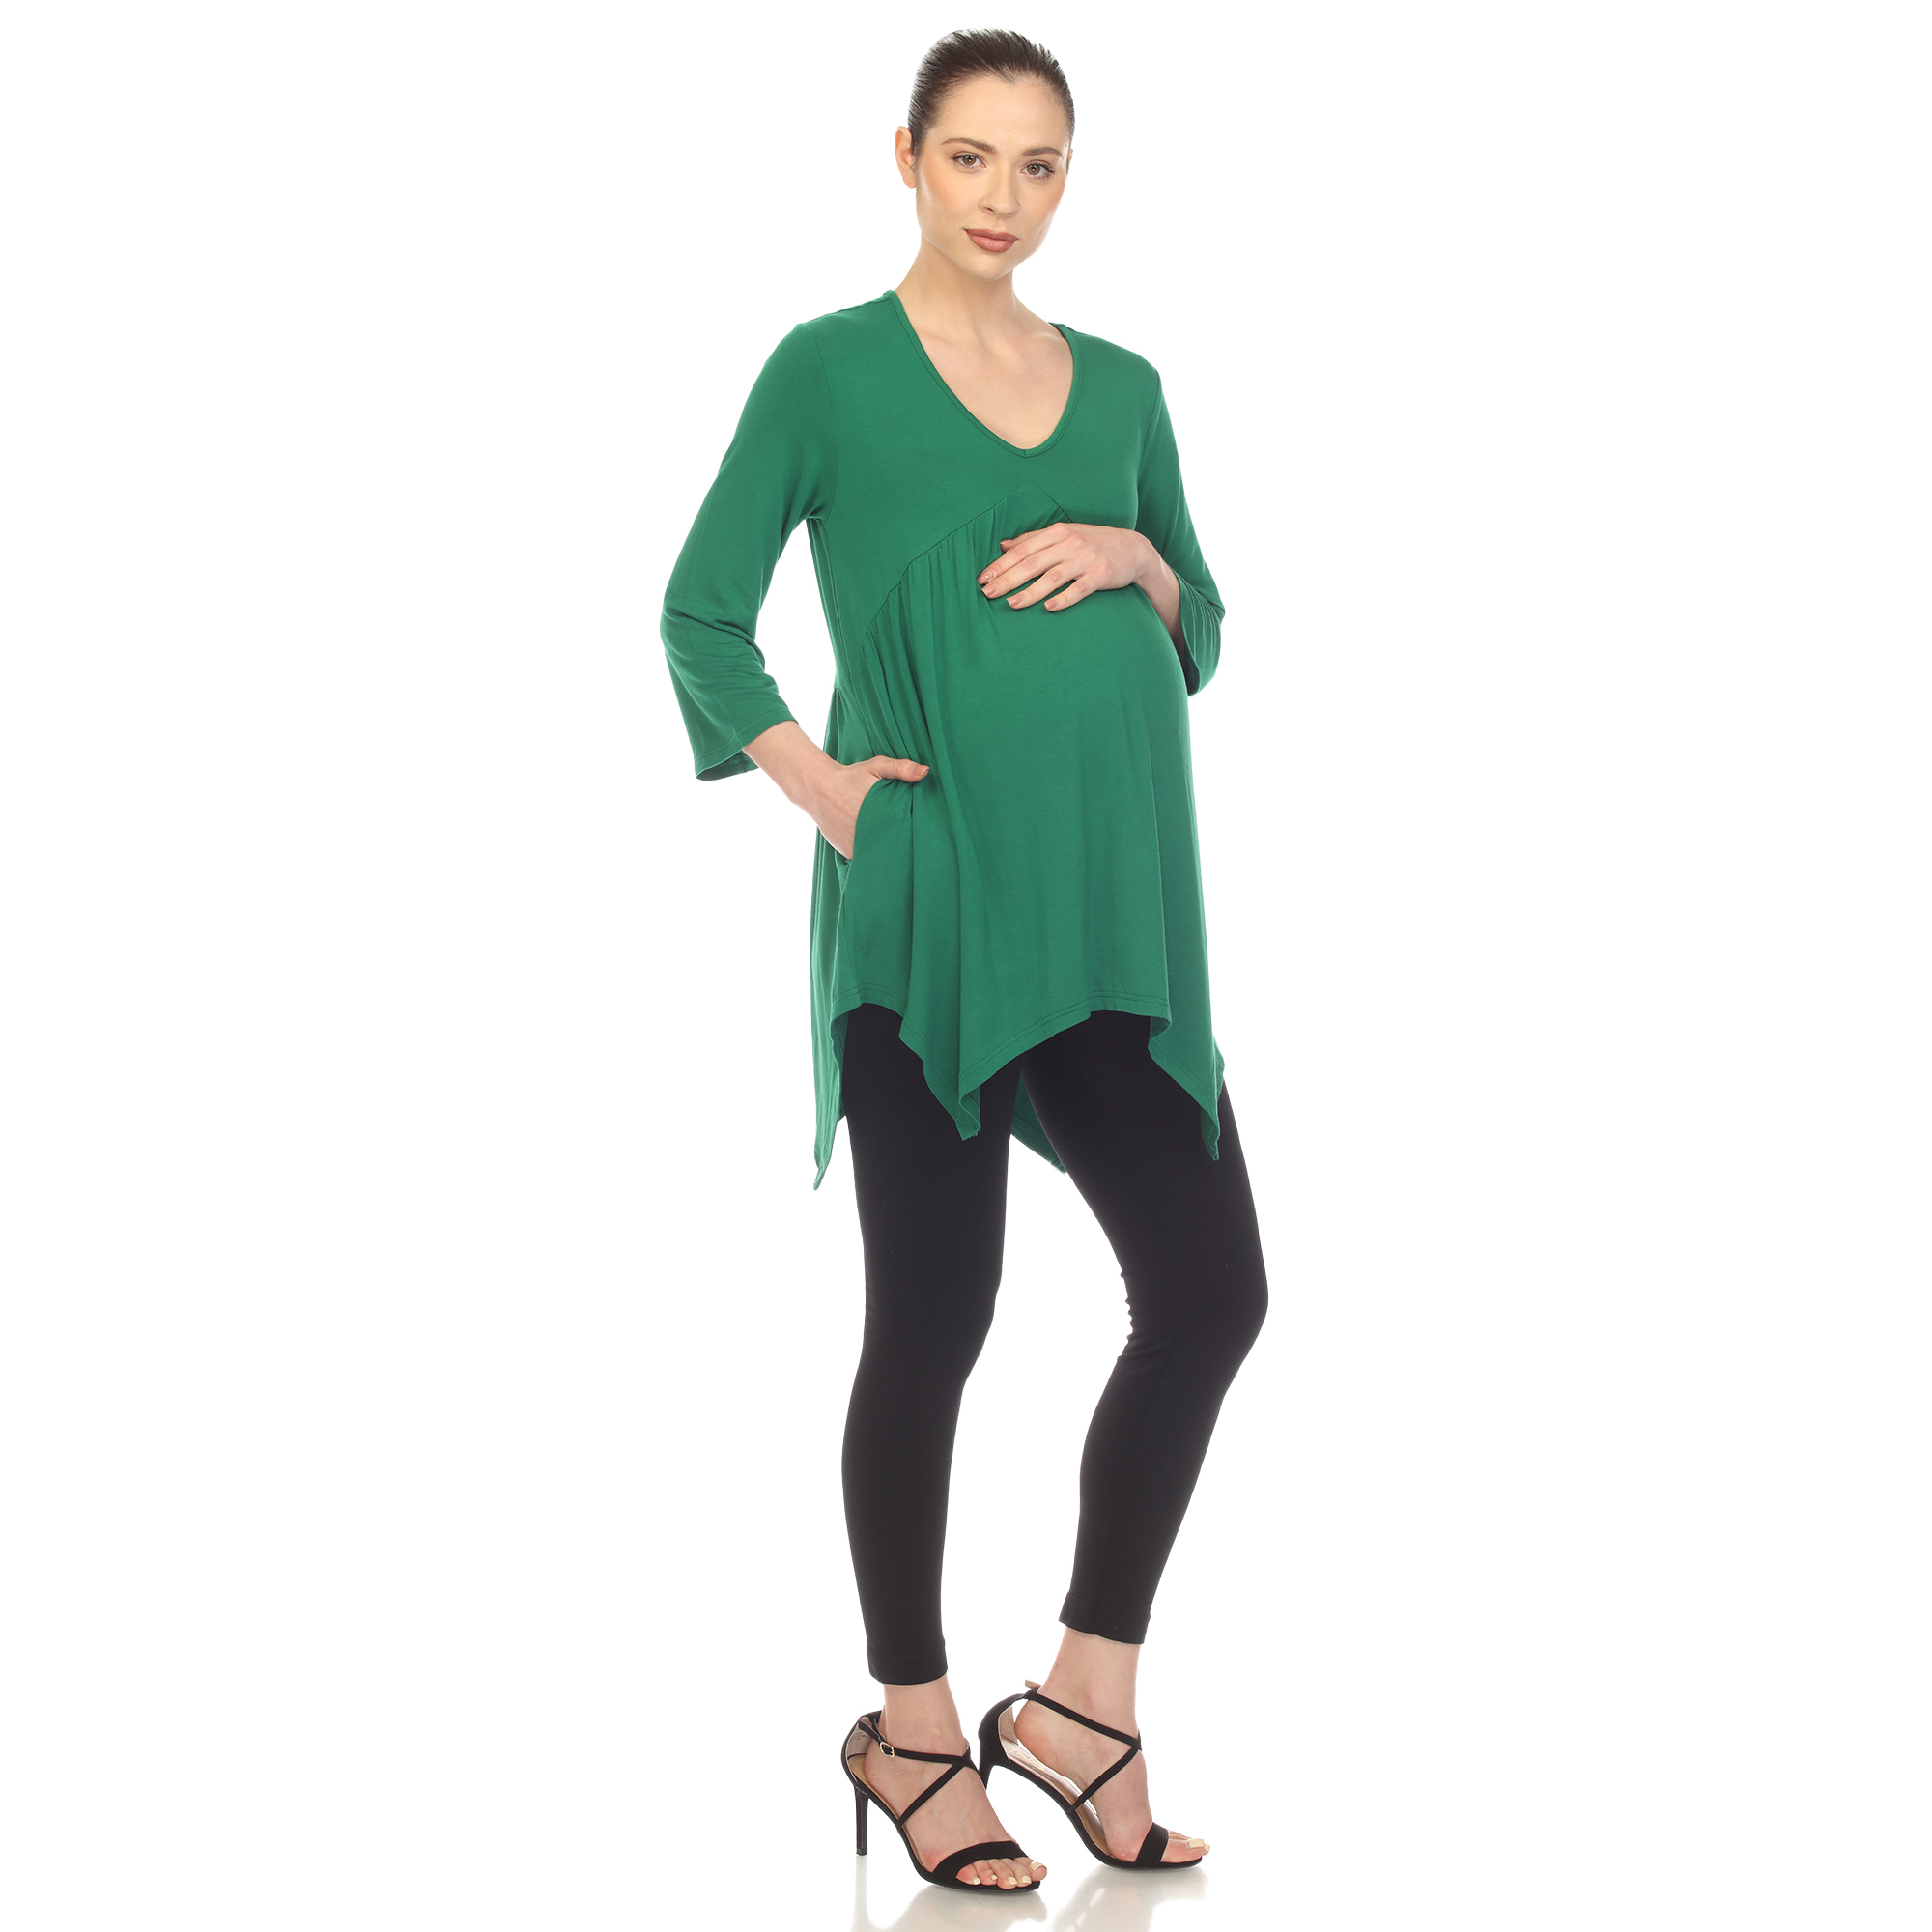 White Mark Women's Maternity Empire Waist V-Neck Tunic Top - Green, 1X